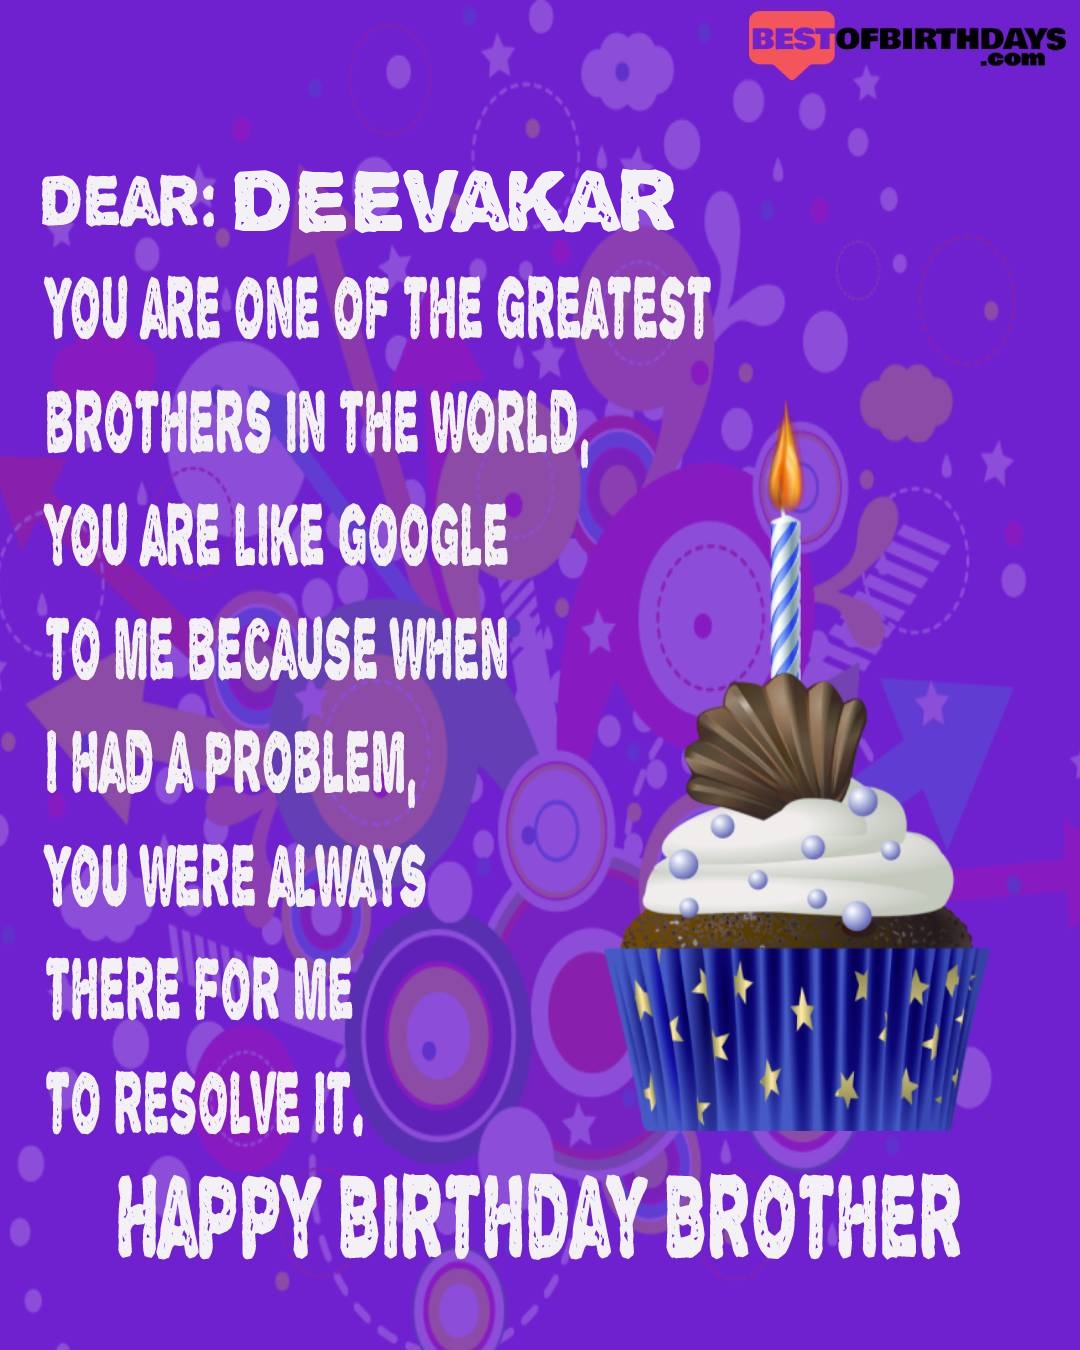 Happy birthday deevakar bhai brother bro